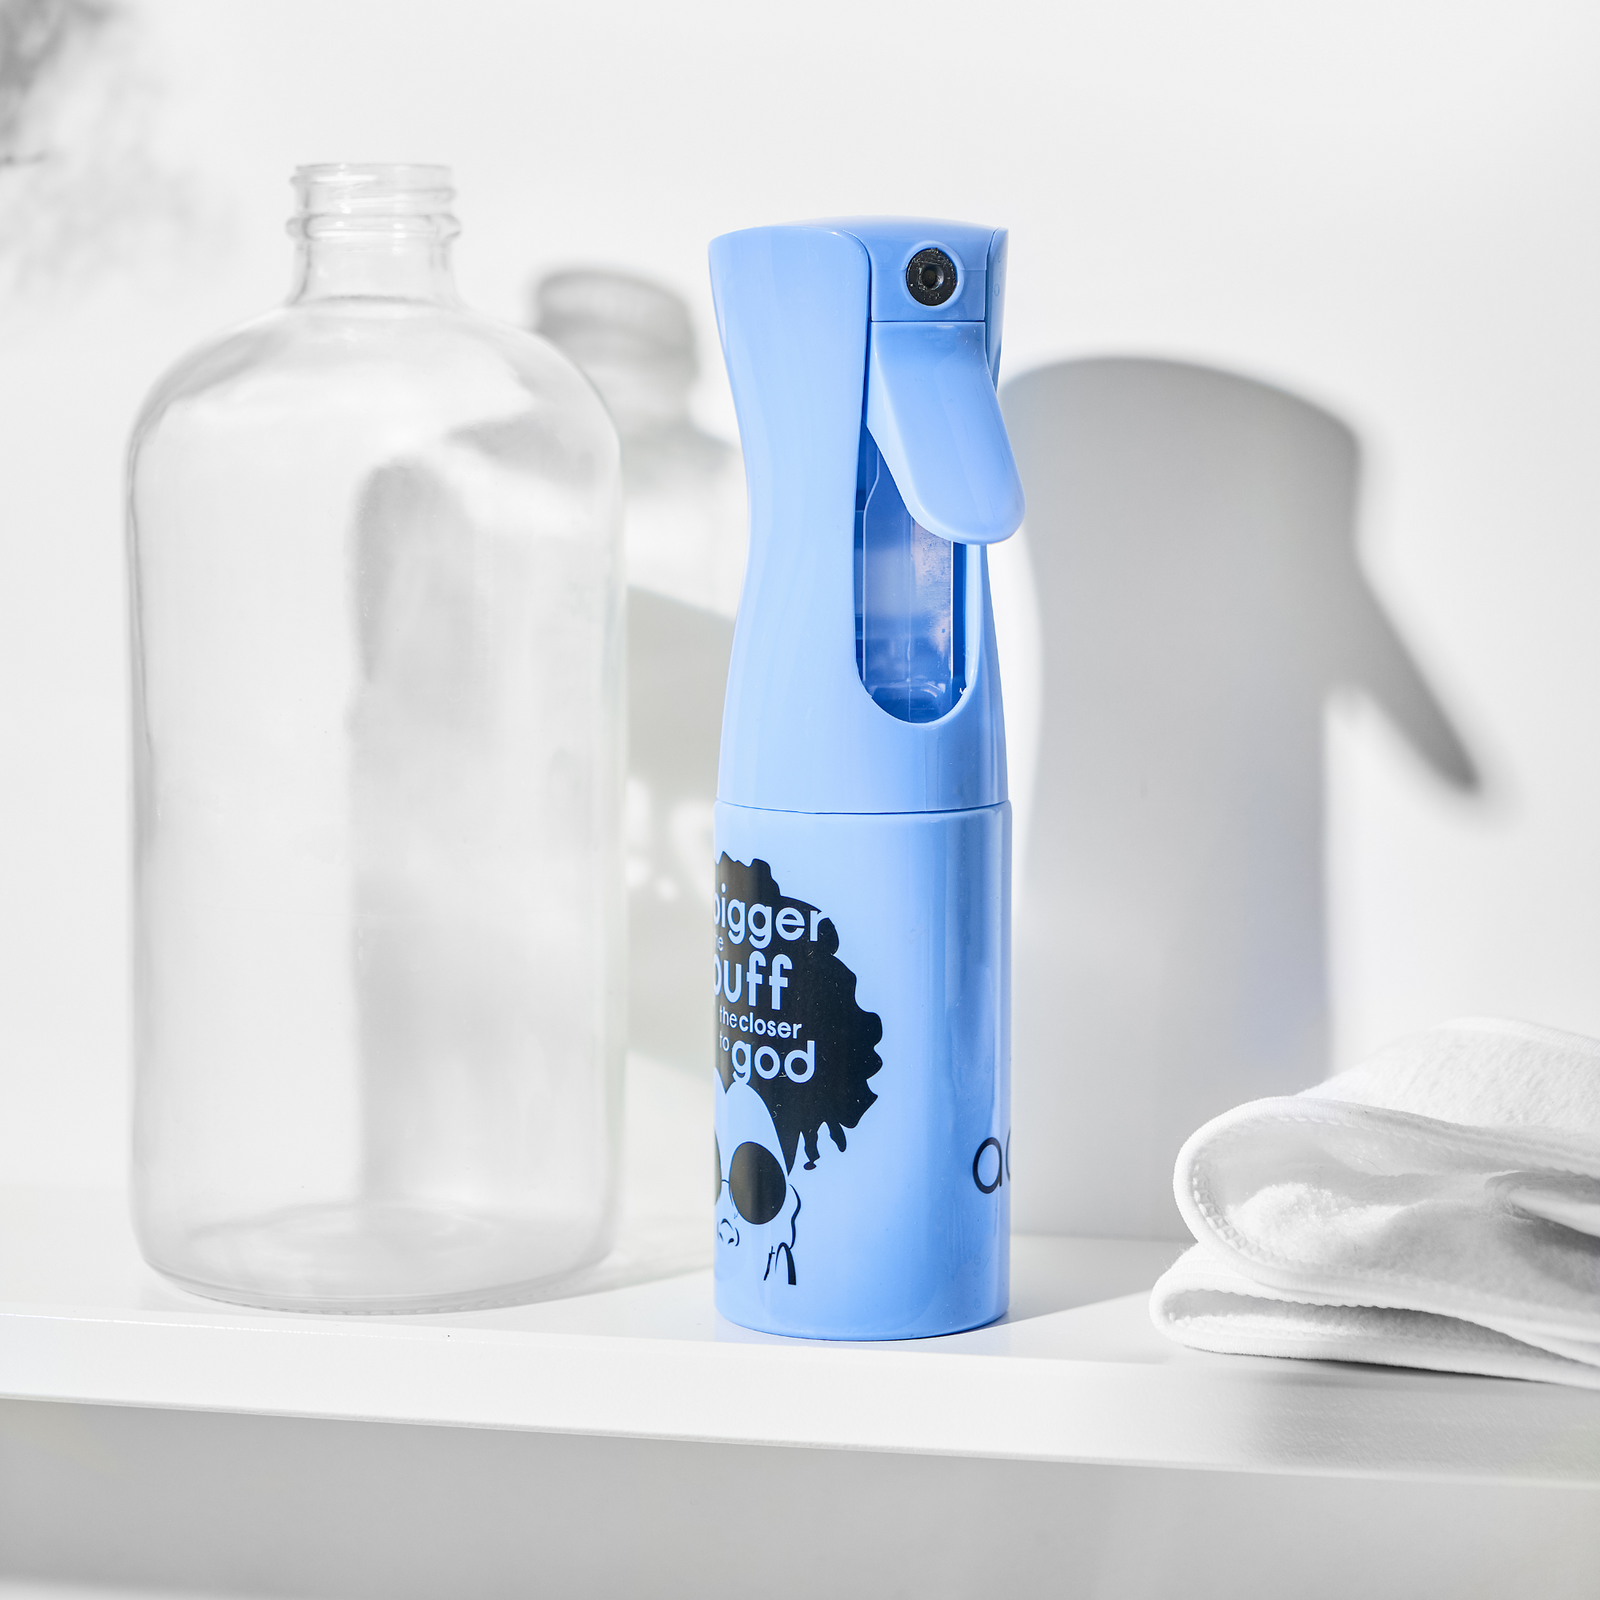 adwoa blue continuous mist sprayer